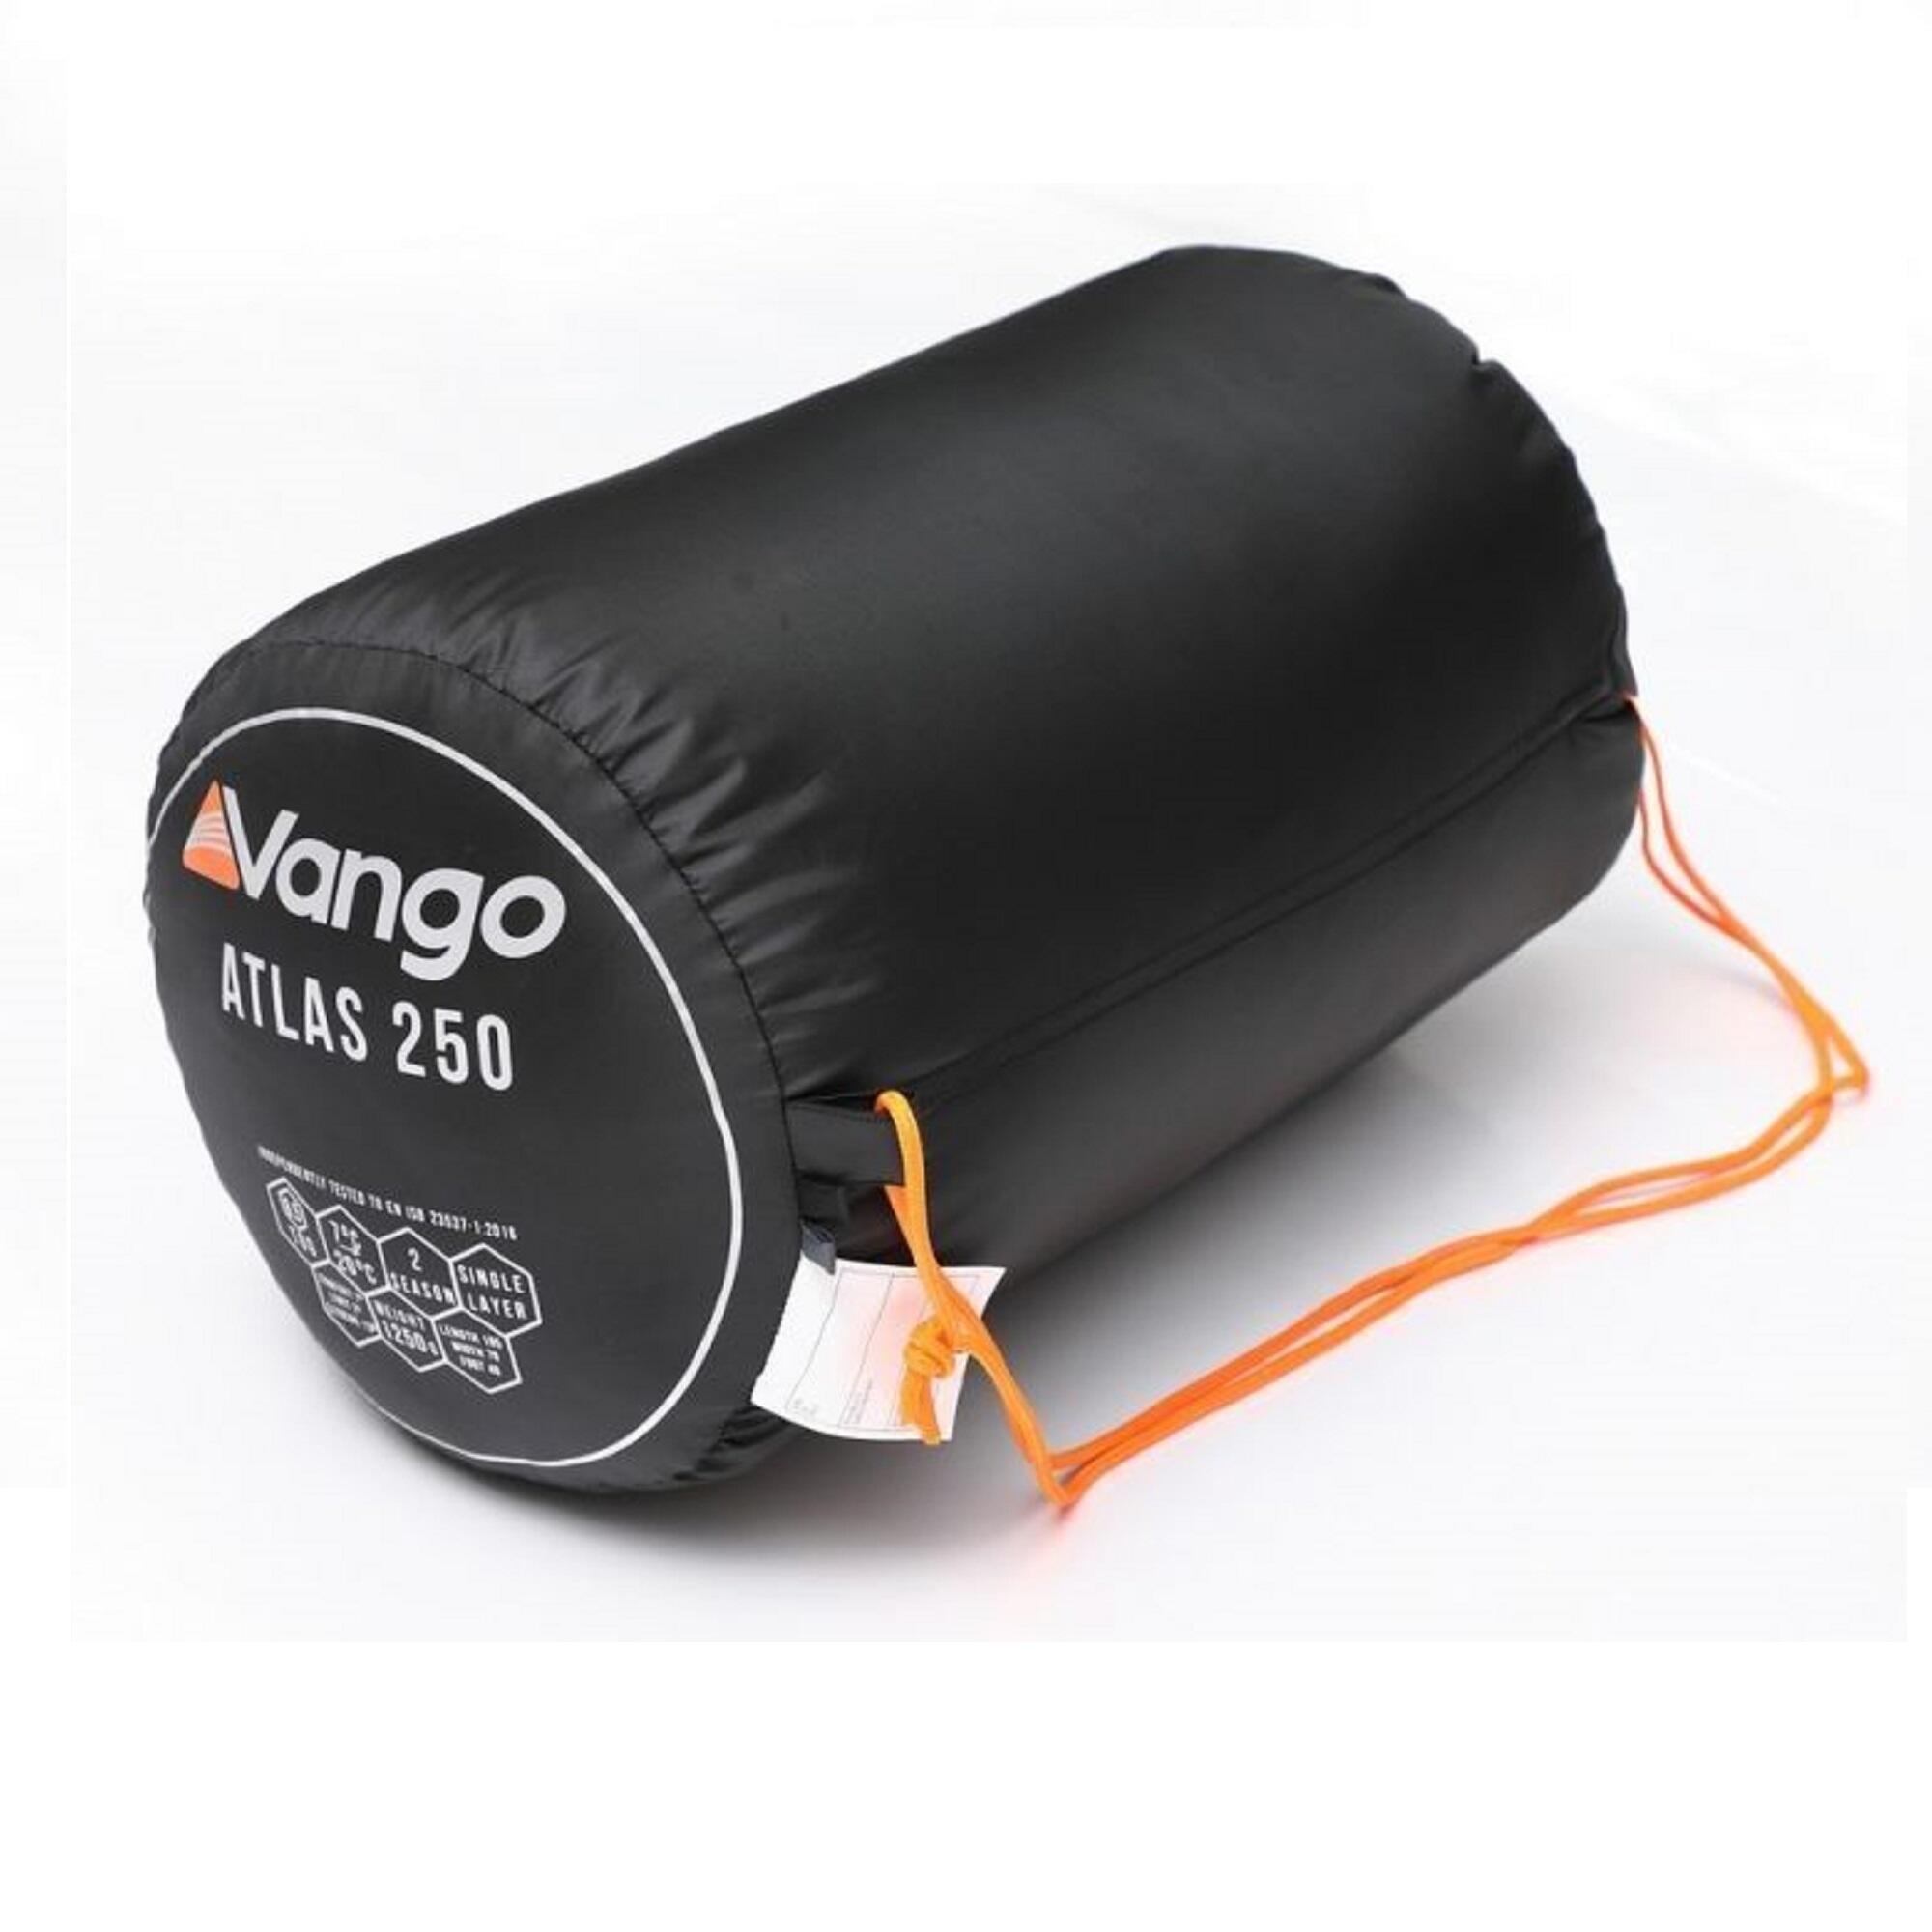 Vango Atlas 250 Sleeping bag - 2-season 4/5